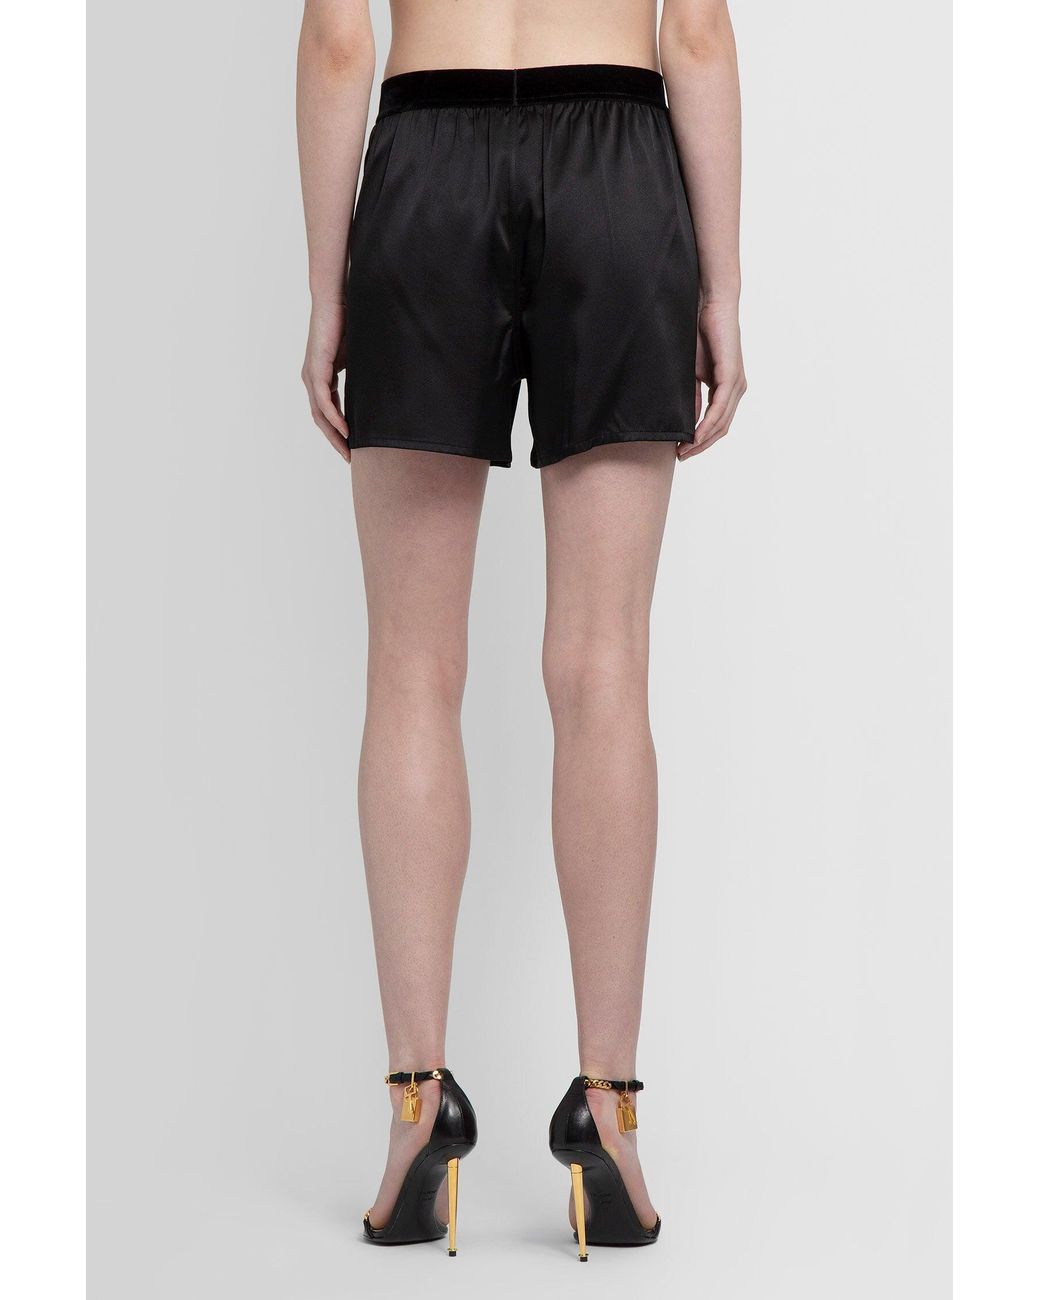 Tom Ford Shorts in Black | Lyst